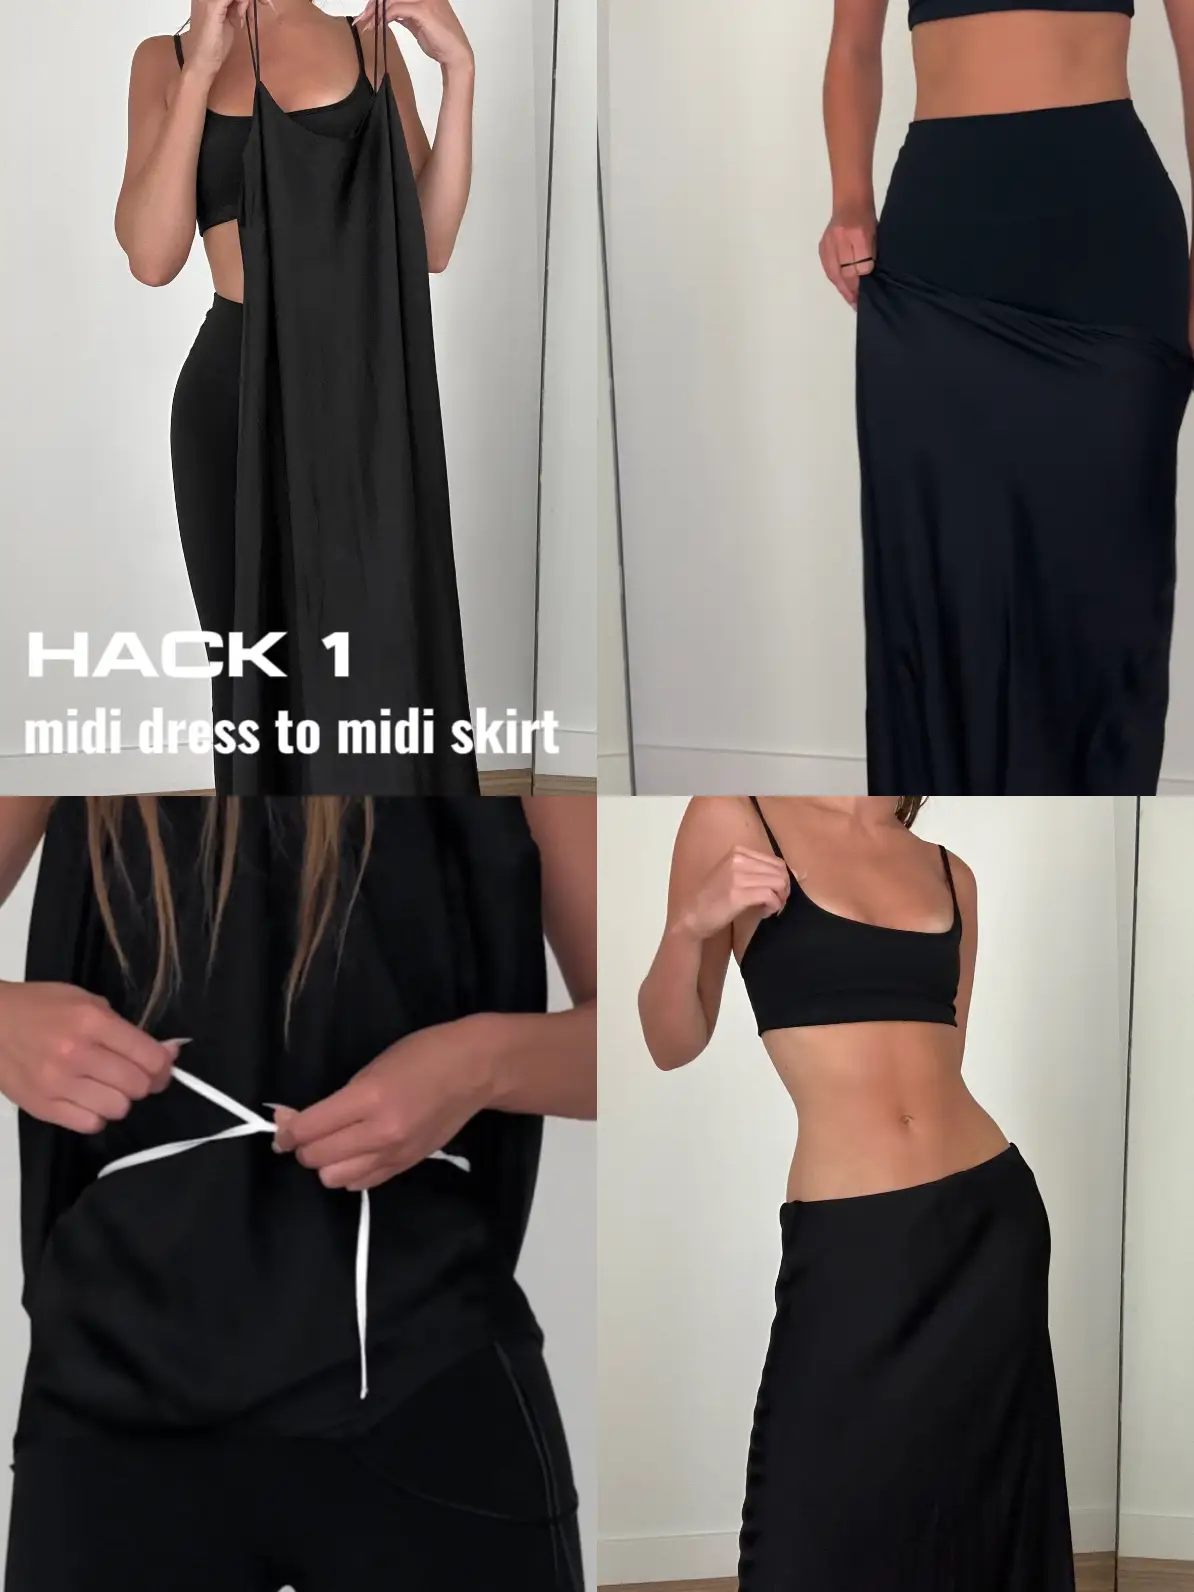 HOW TO WEAR A BRA WITH A ONE SHOULDER DRESS #fashionhacks #fashionhack